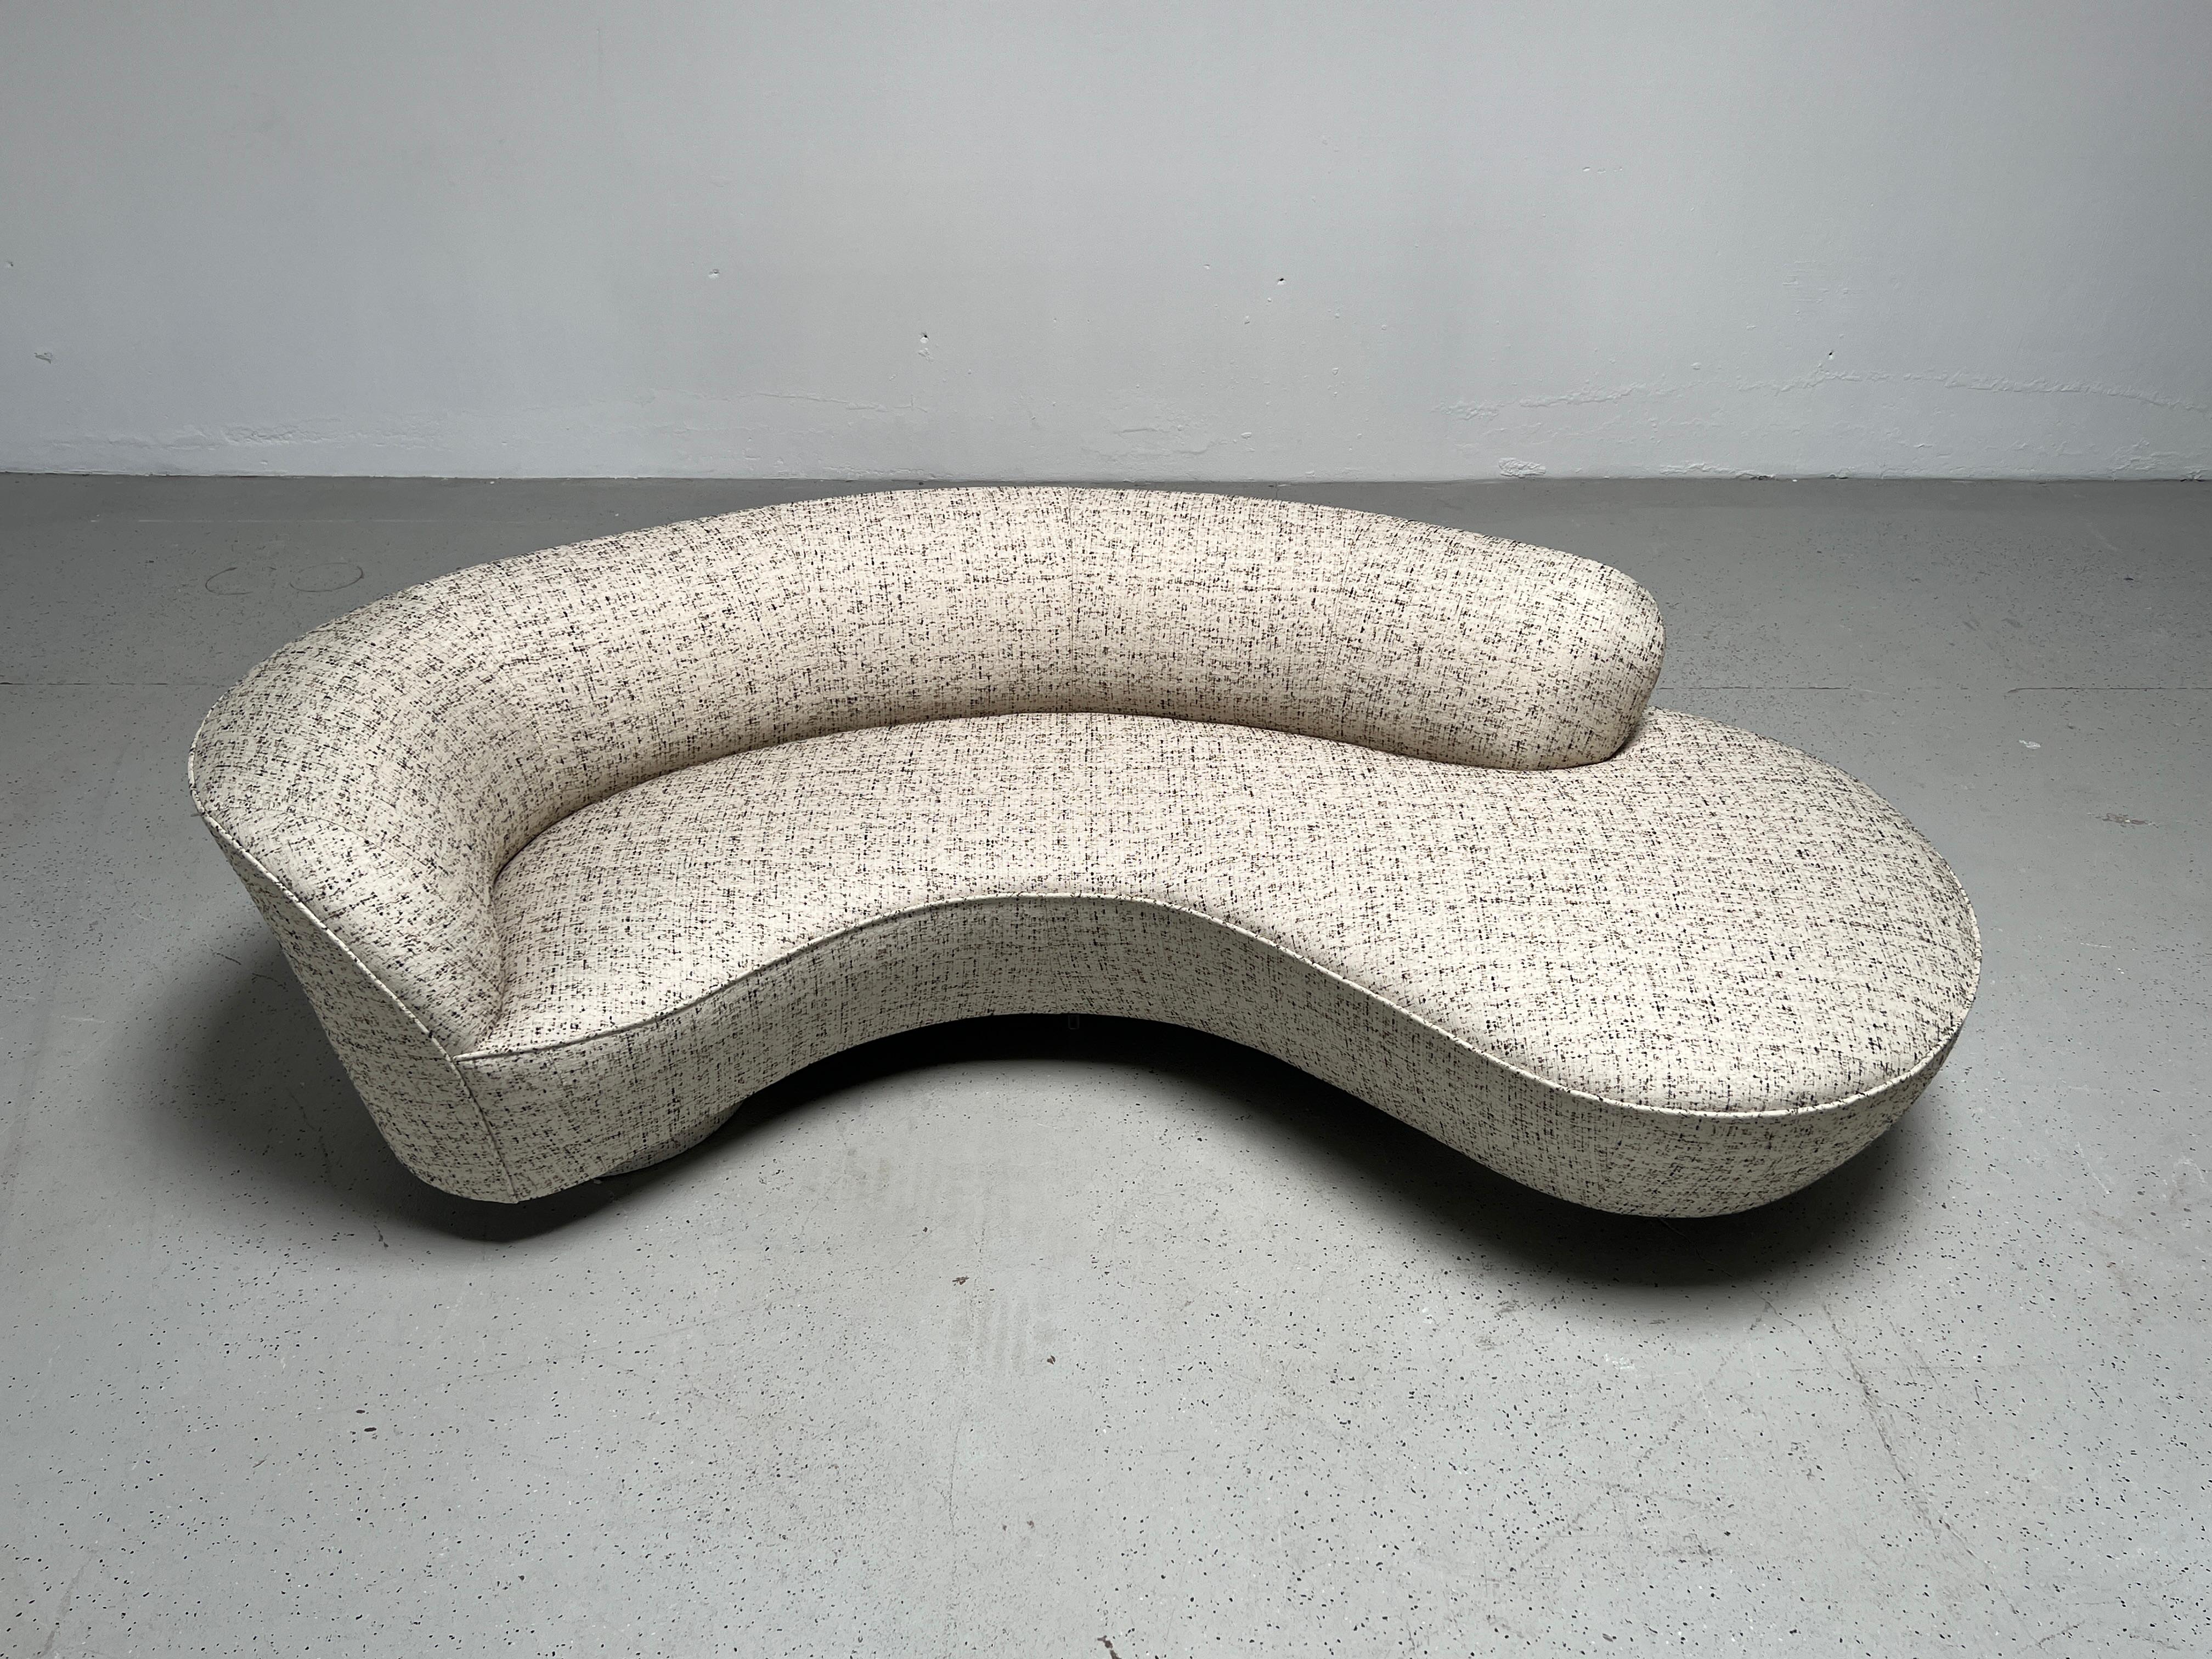 Sofa by Vladimir Kagan for Directional 1